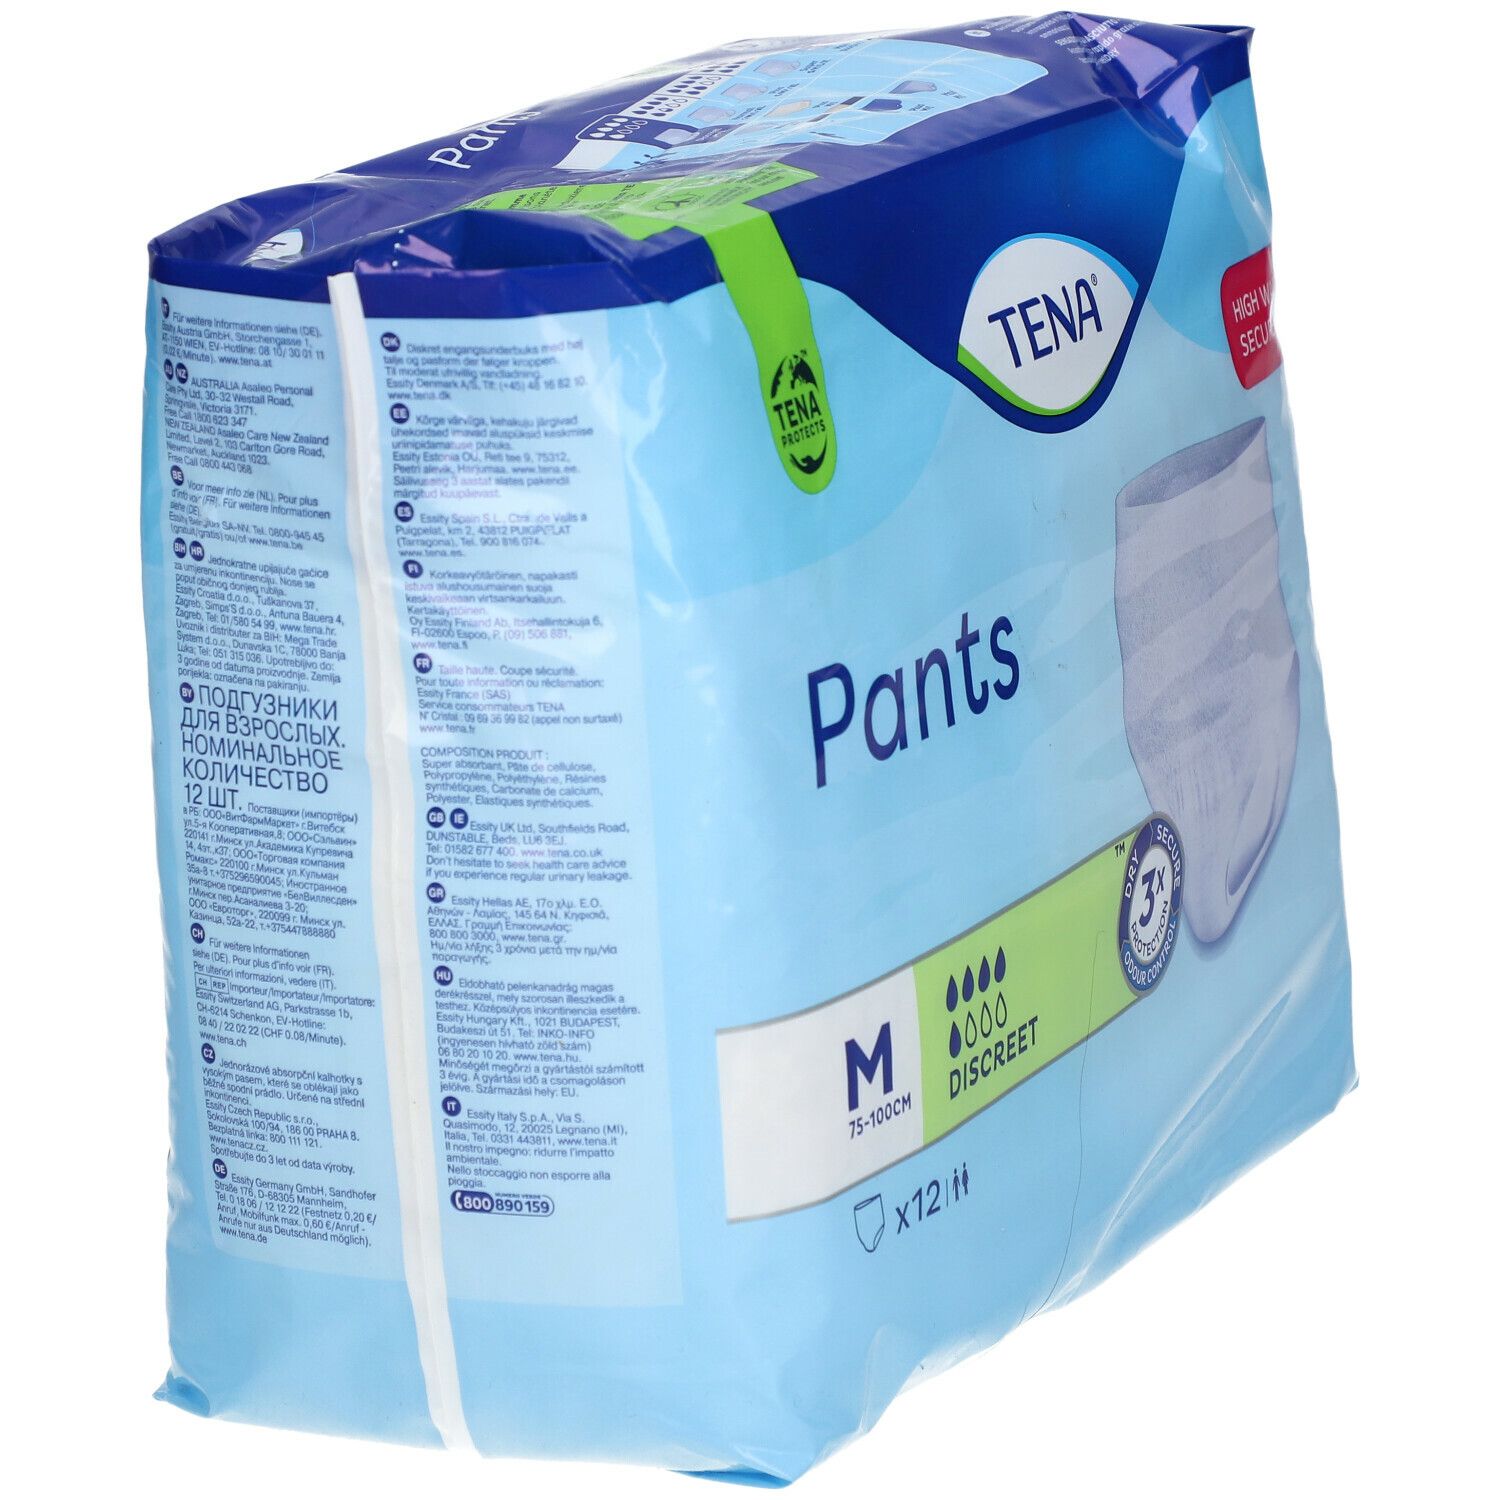 TENA® Pants Discreet M 75-100 cm